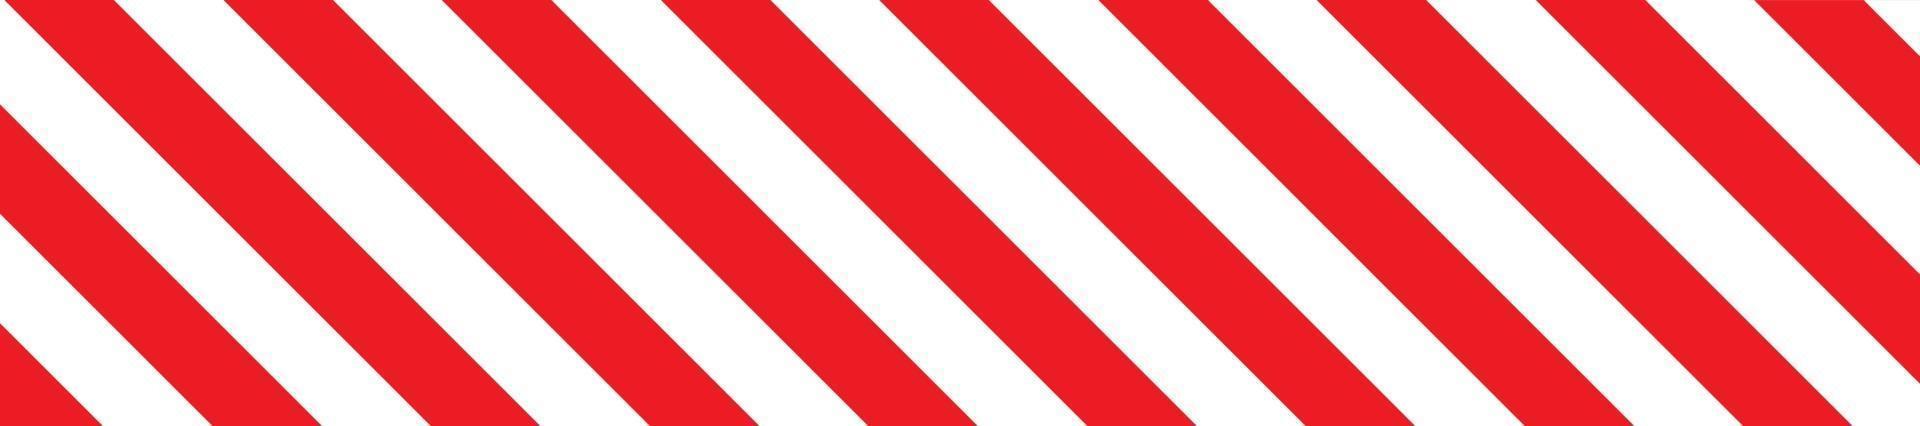 rayas rojas sobre fondo blanco. patrón diagonal rayado vector